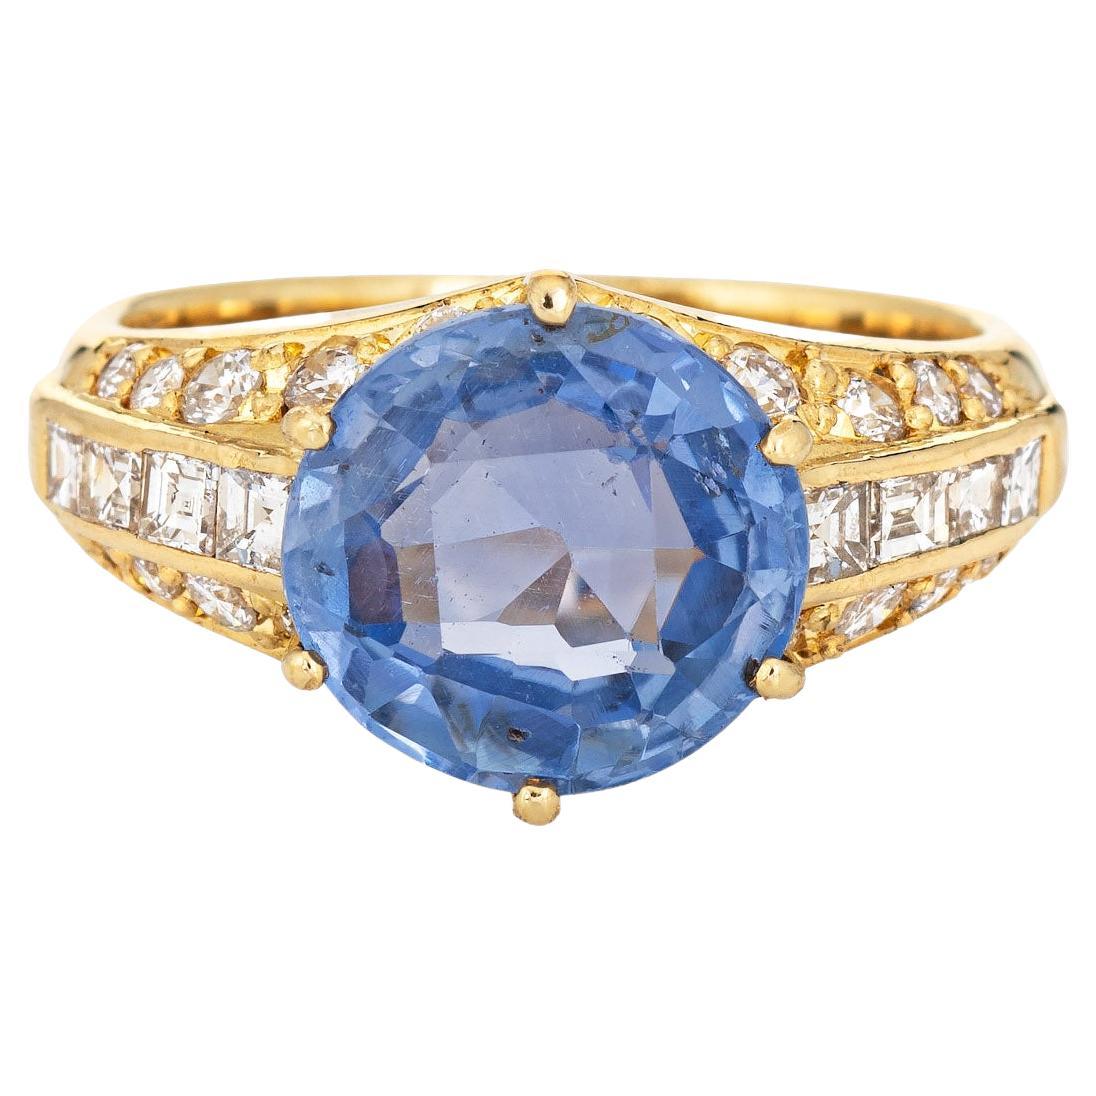 4.02ct Natural Ceylon Sapphire Diamond Ring Vintage 18k Gemstone Engagement 6